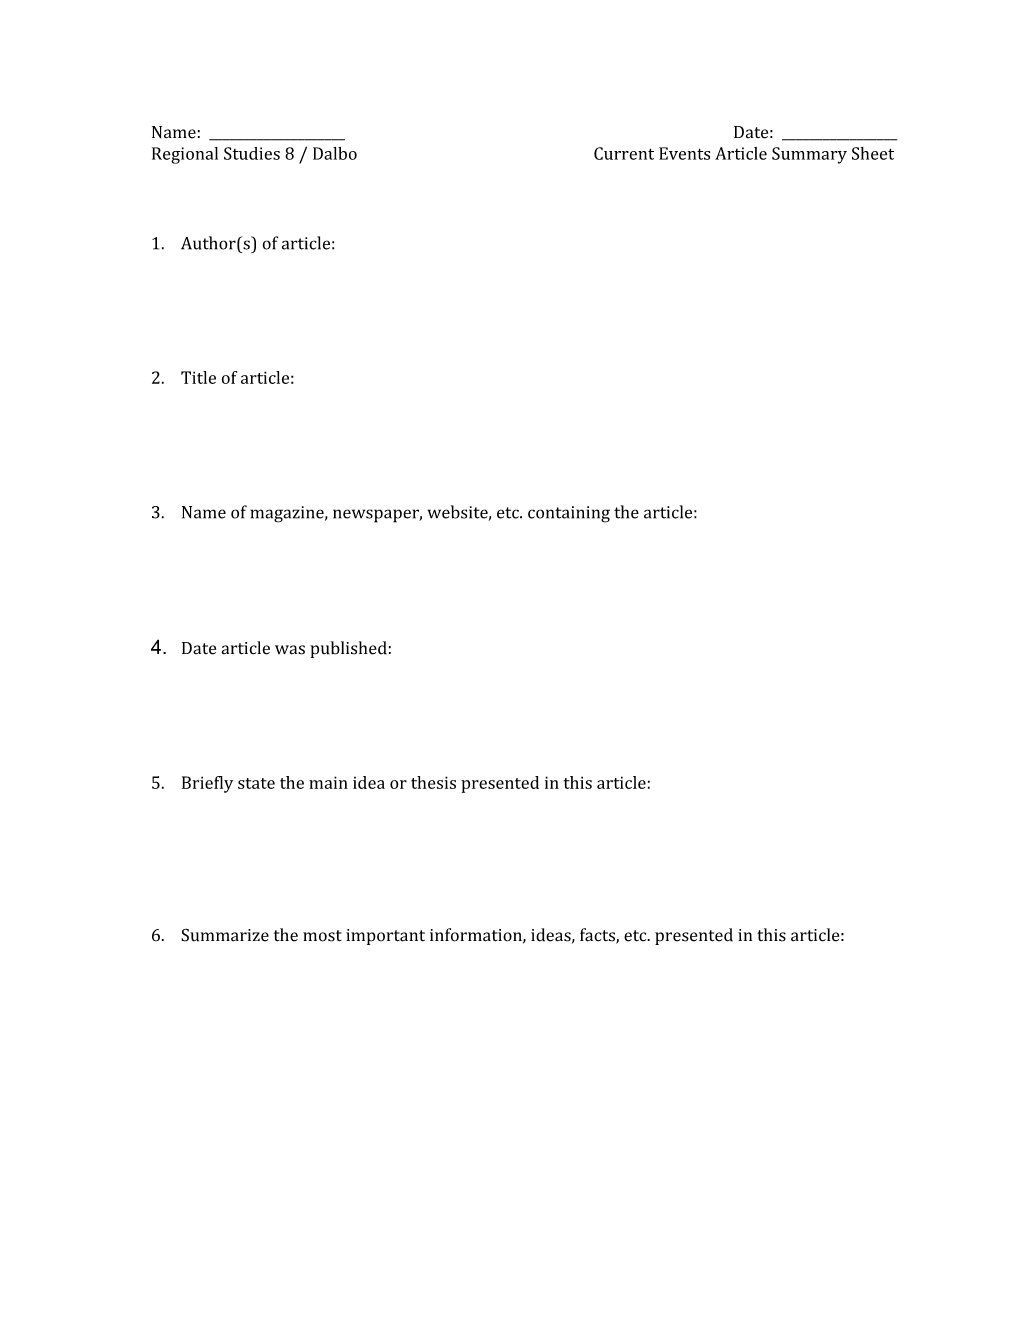 Article Summary Worksheet